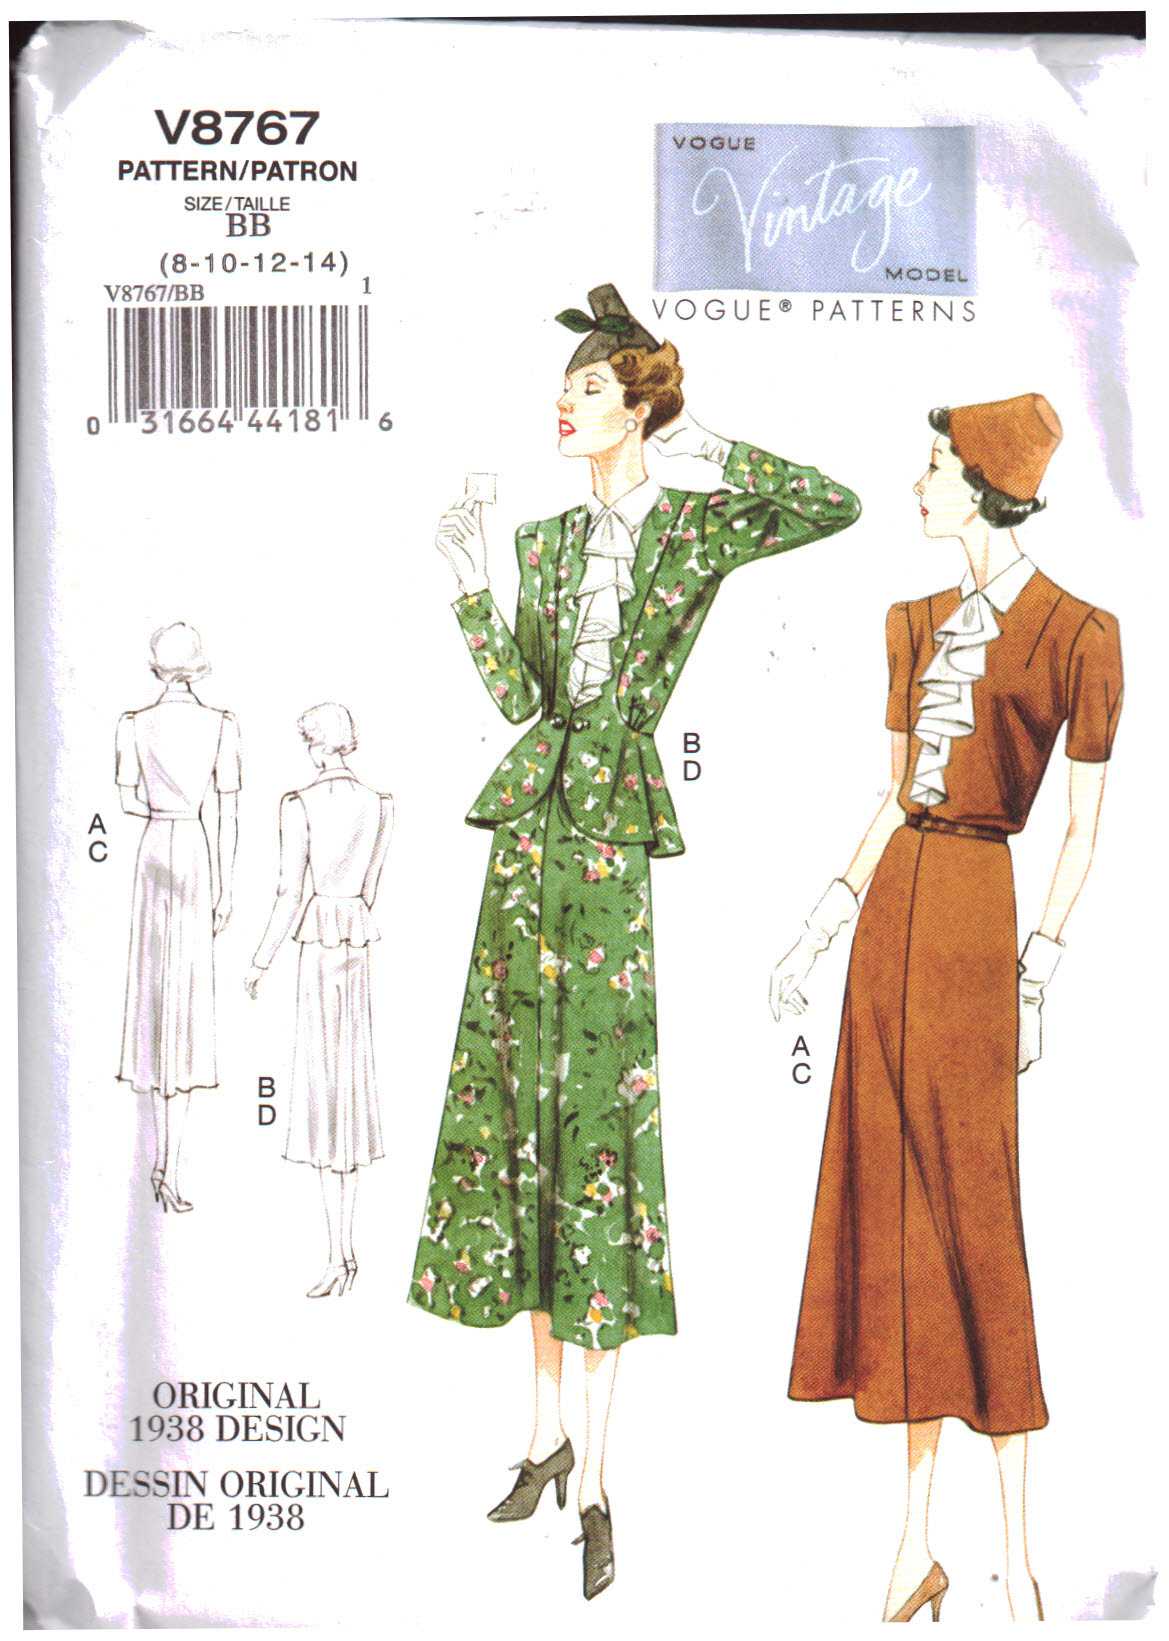 Details about   Vogue 1916 Tamotsu Wardrobe Jacket Dress Top Skirt Sewing Pattern 8-12 Uncut 